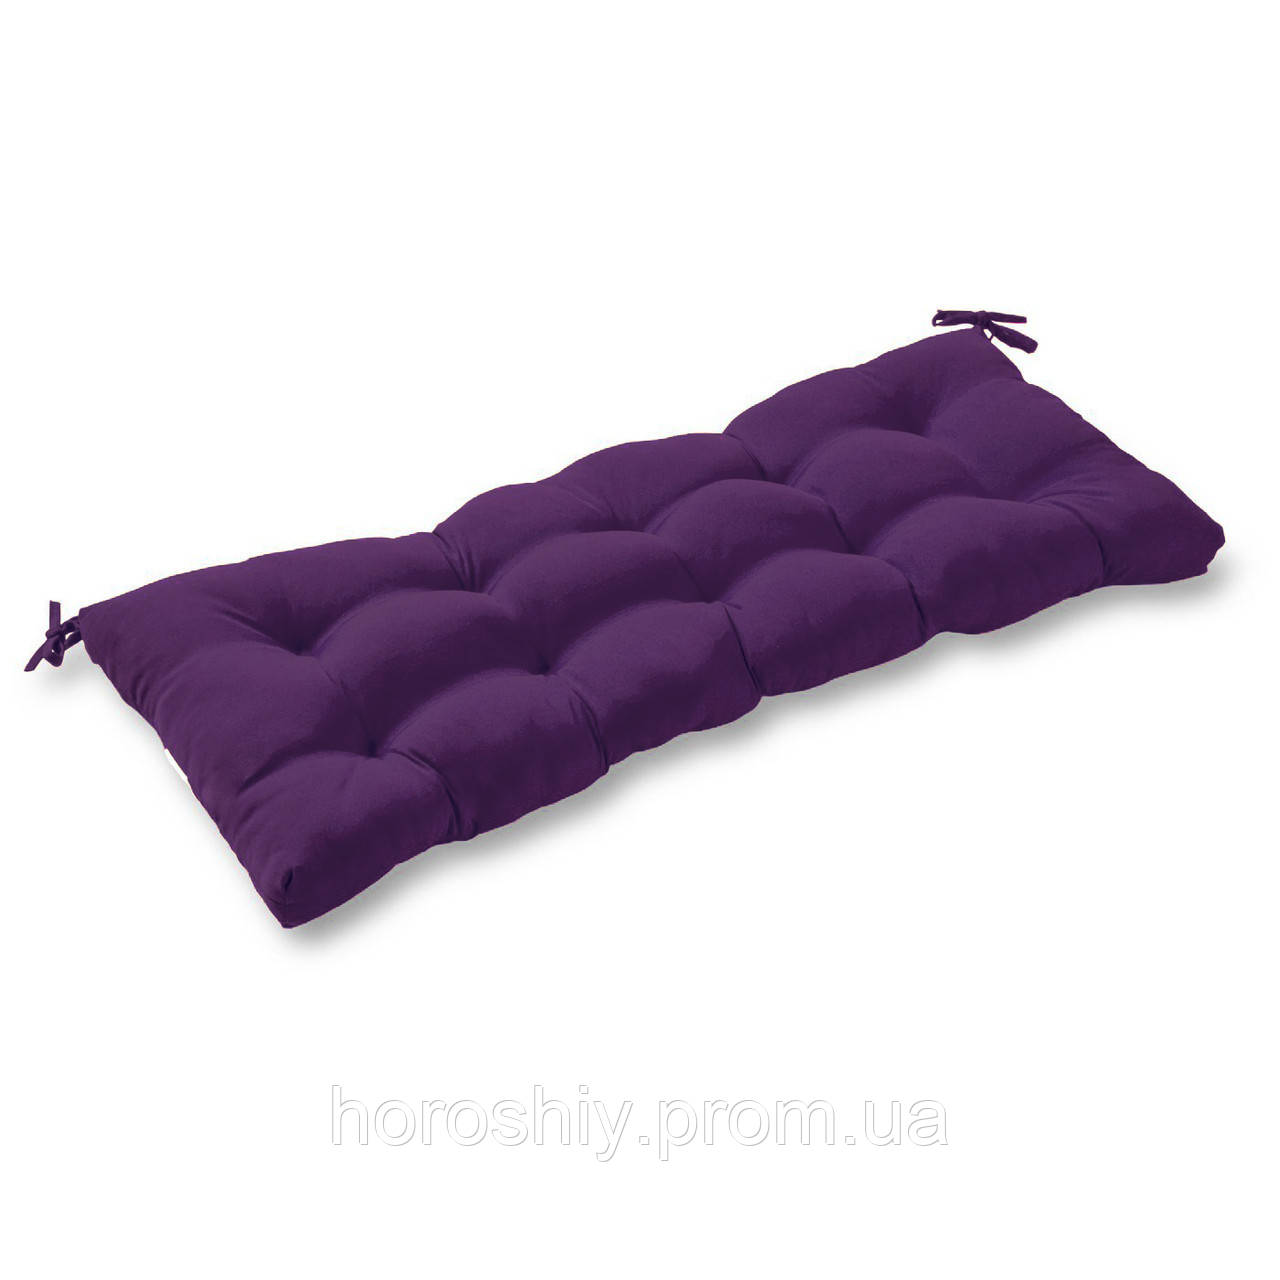 Подушка матрац для садових гойдалок з холлофайберу yeti home 120х60х10 преміум бавовна Фіолетовий